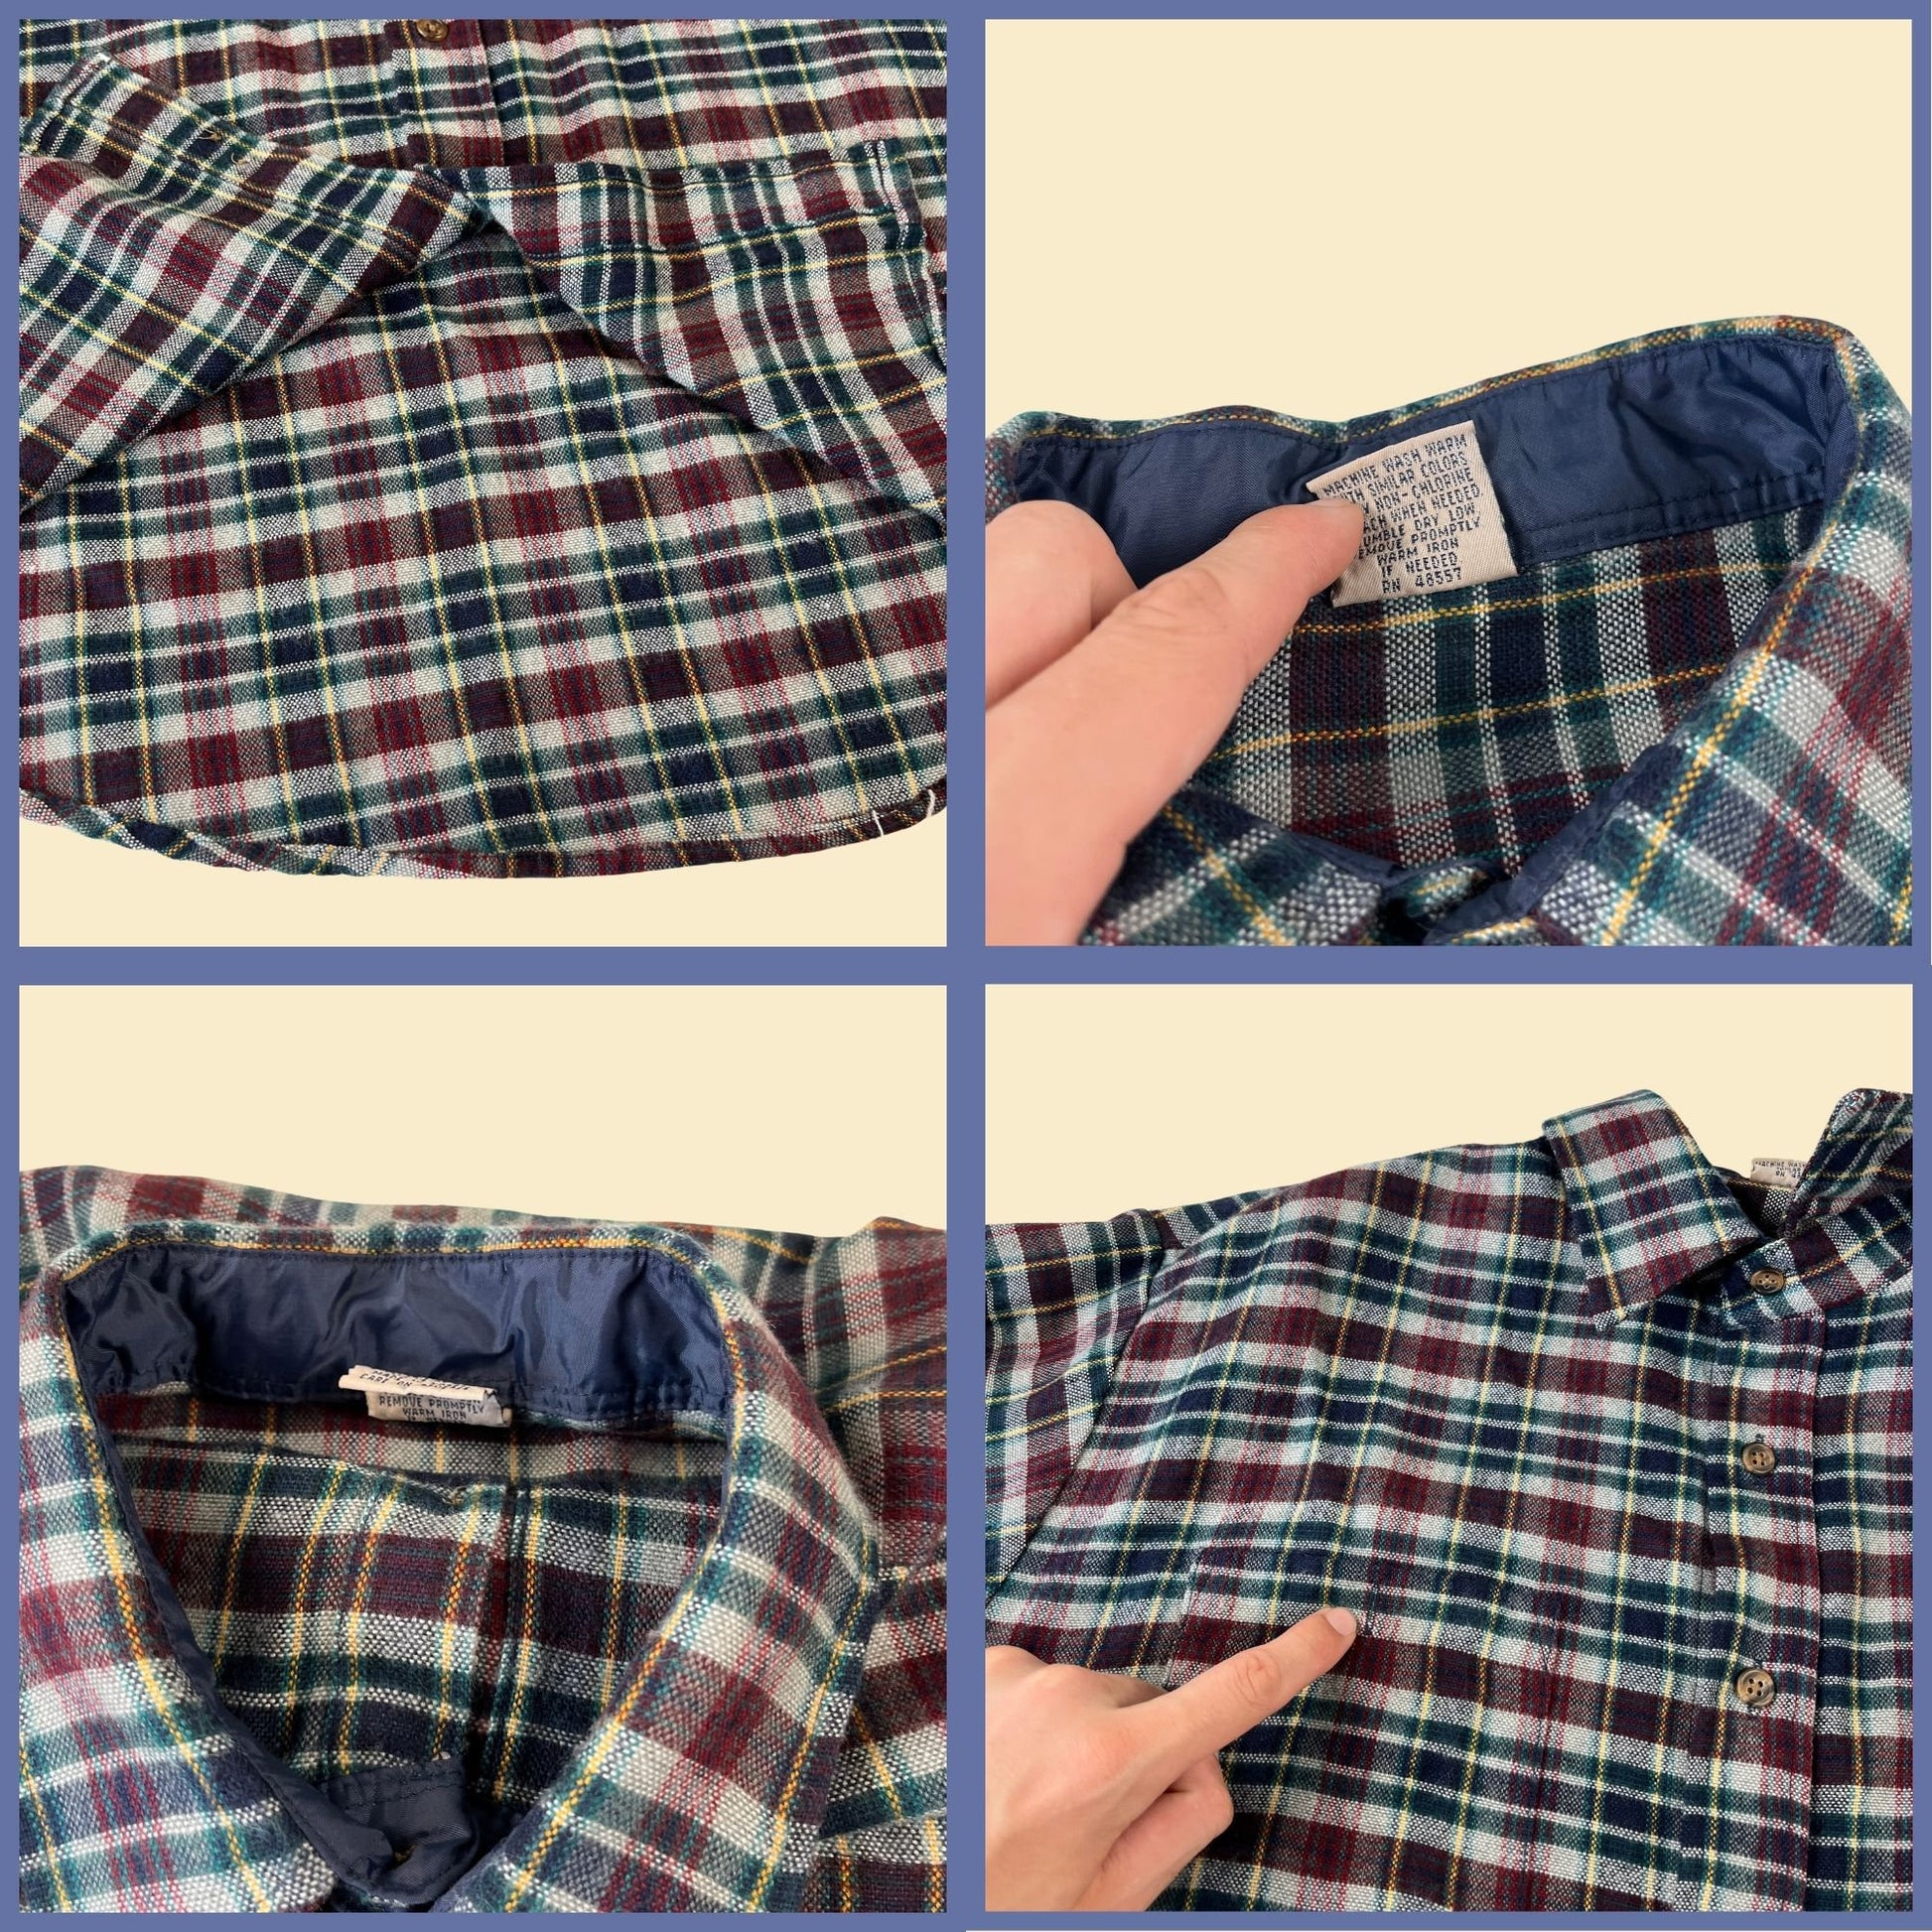 90s XL flannel shirt by Windridge, vintage green/burgundy plaid button down acrylic flannel shirt